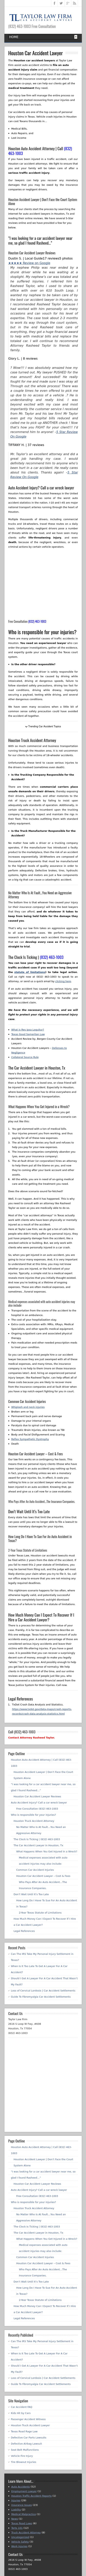 Houston Car Accident Lawyers - Houston TX Lawyers